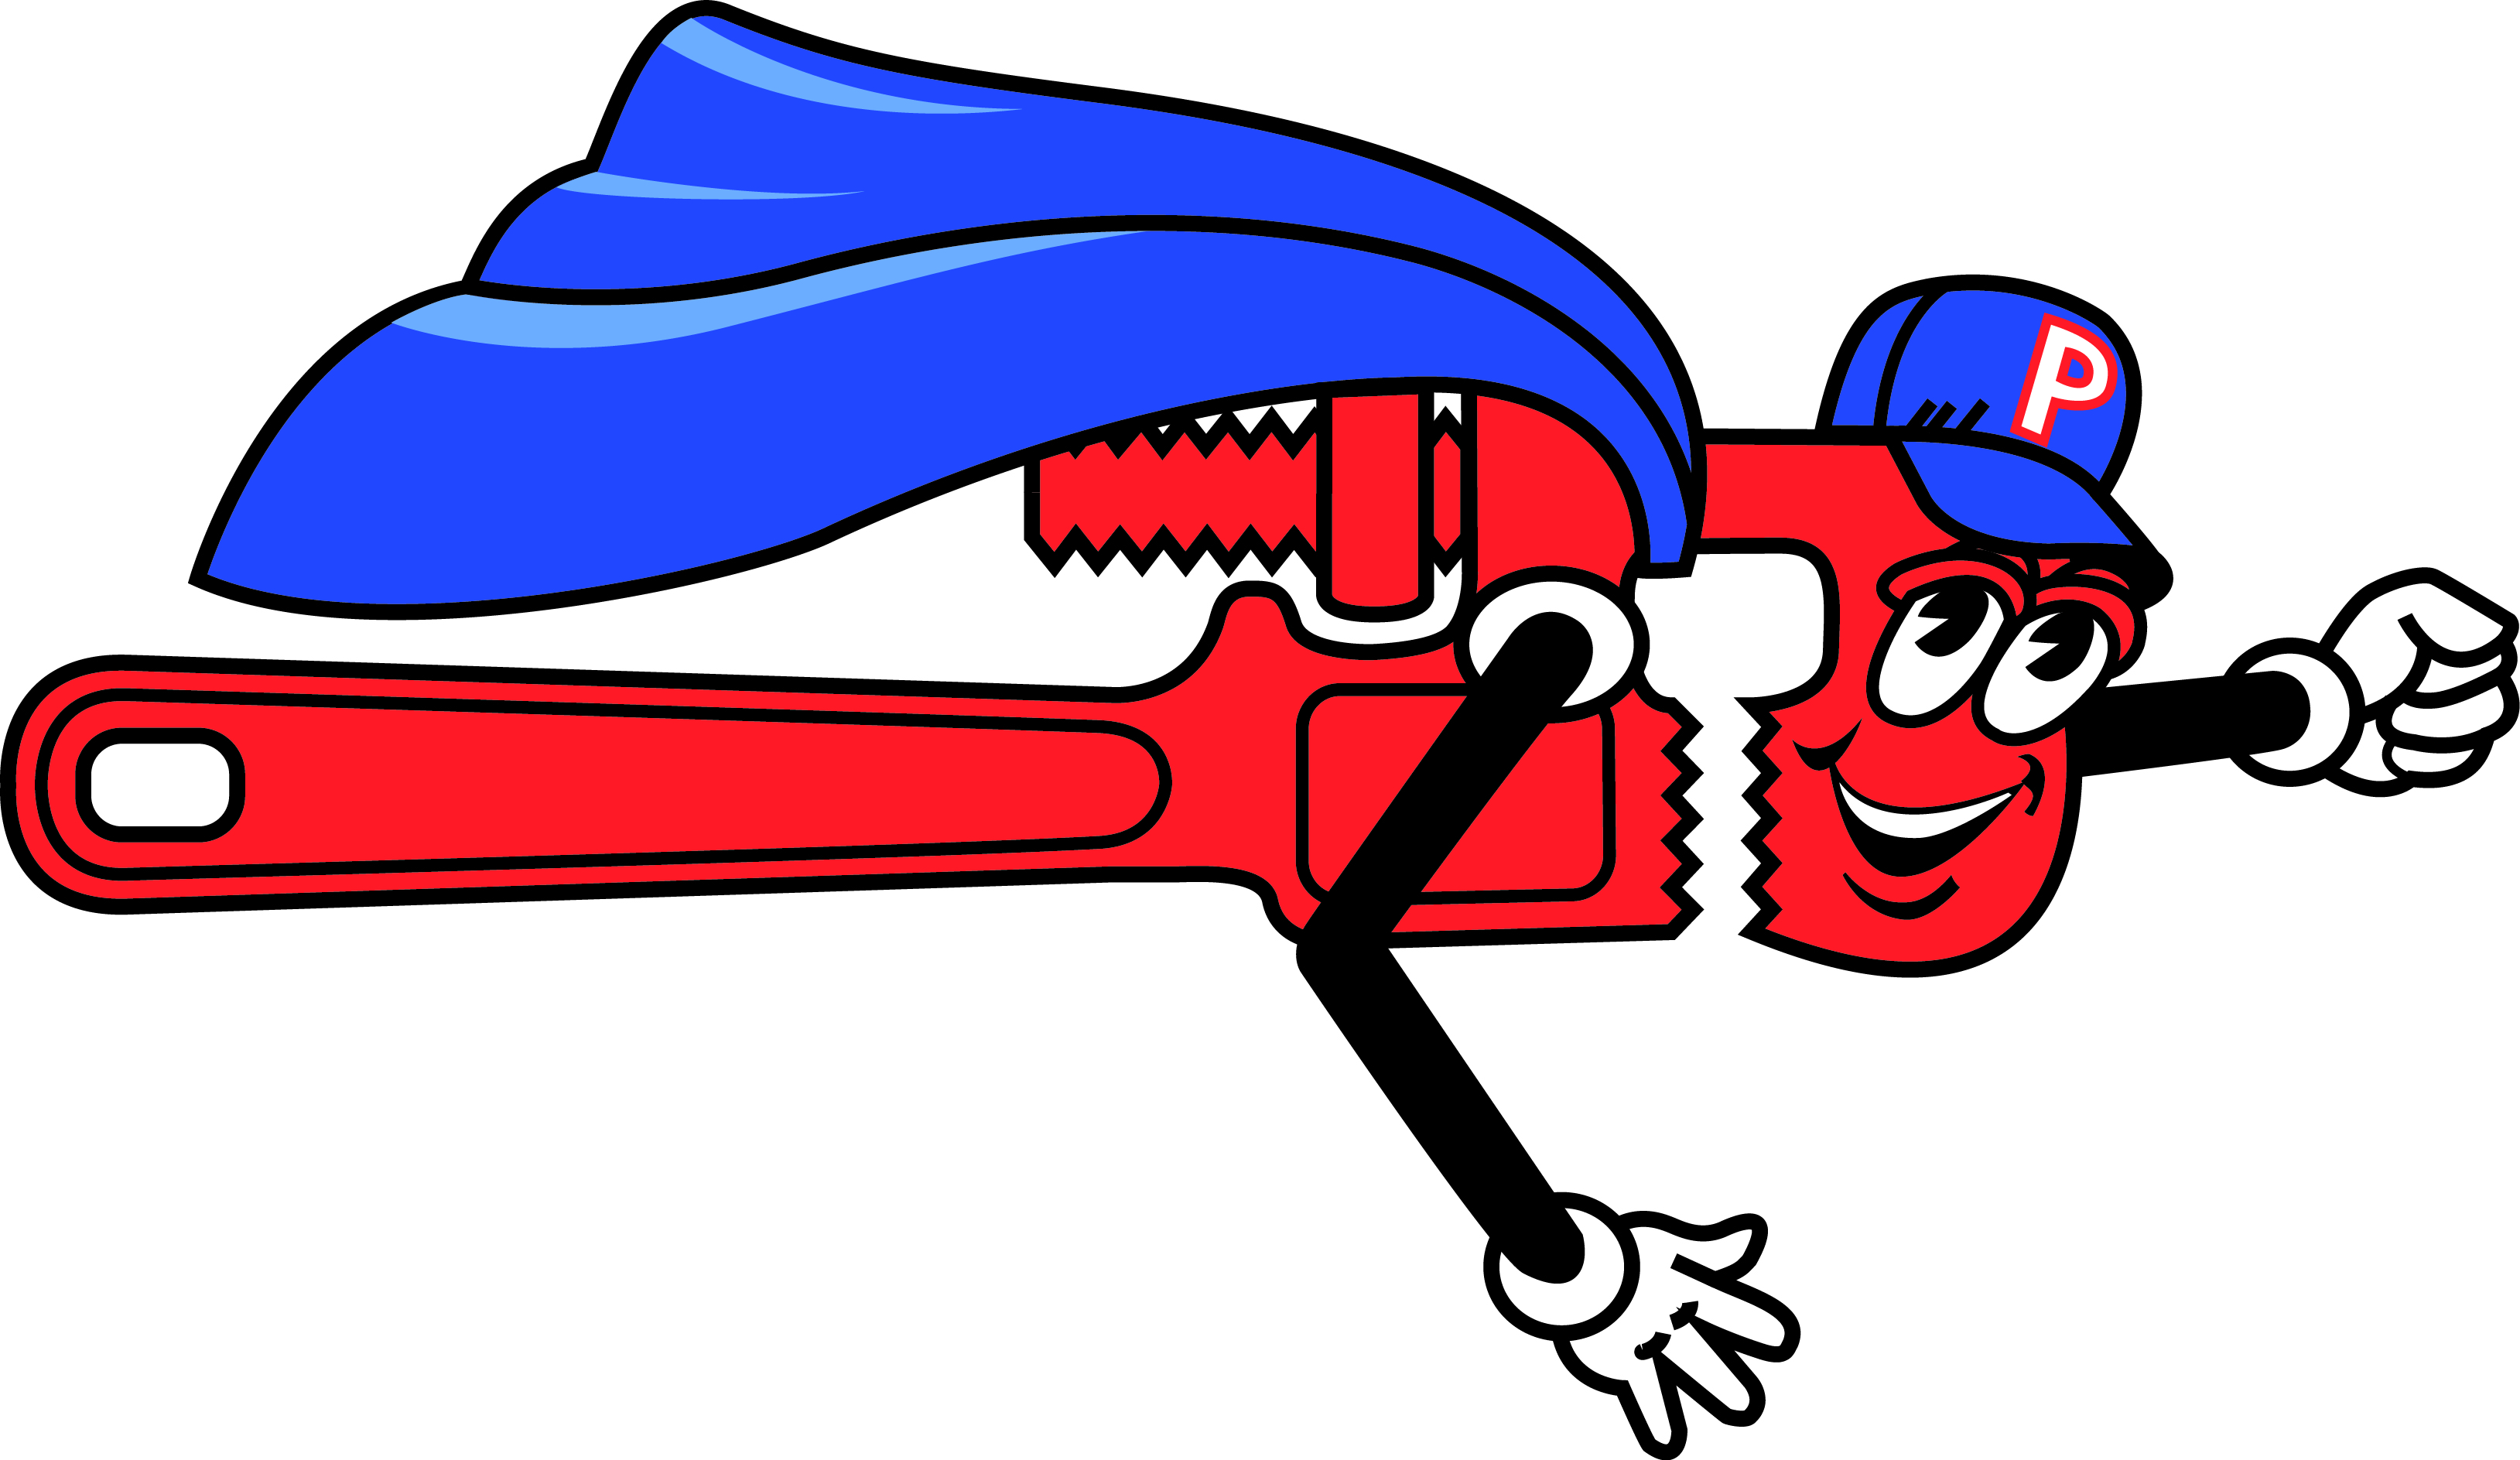 plumbing clip art logo - photo #40